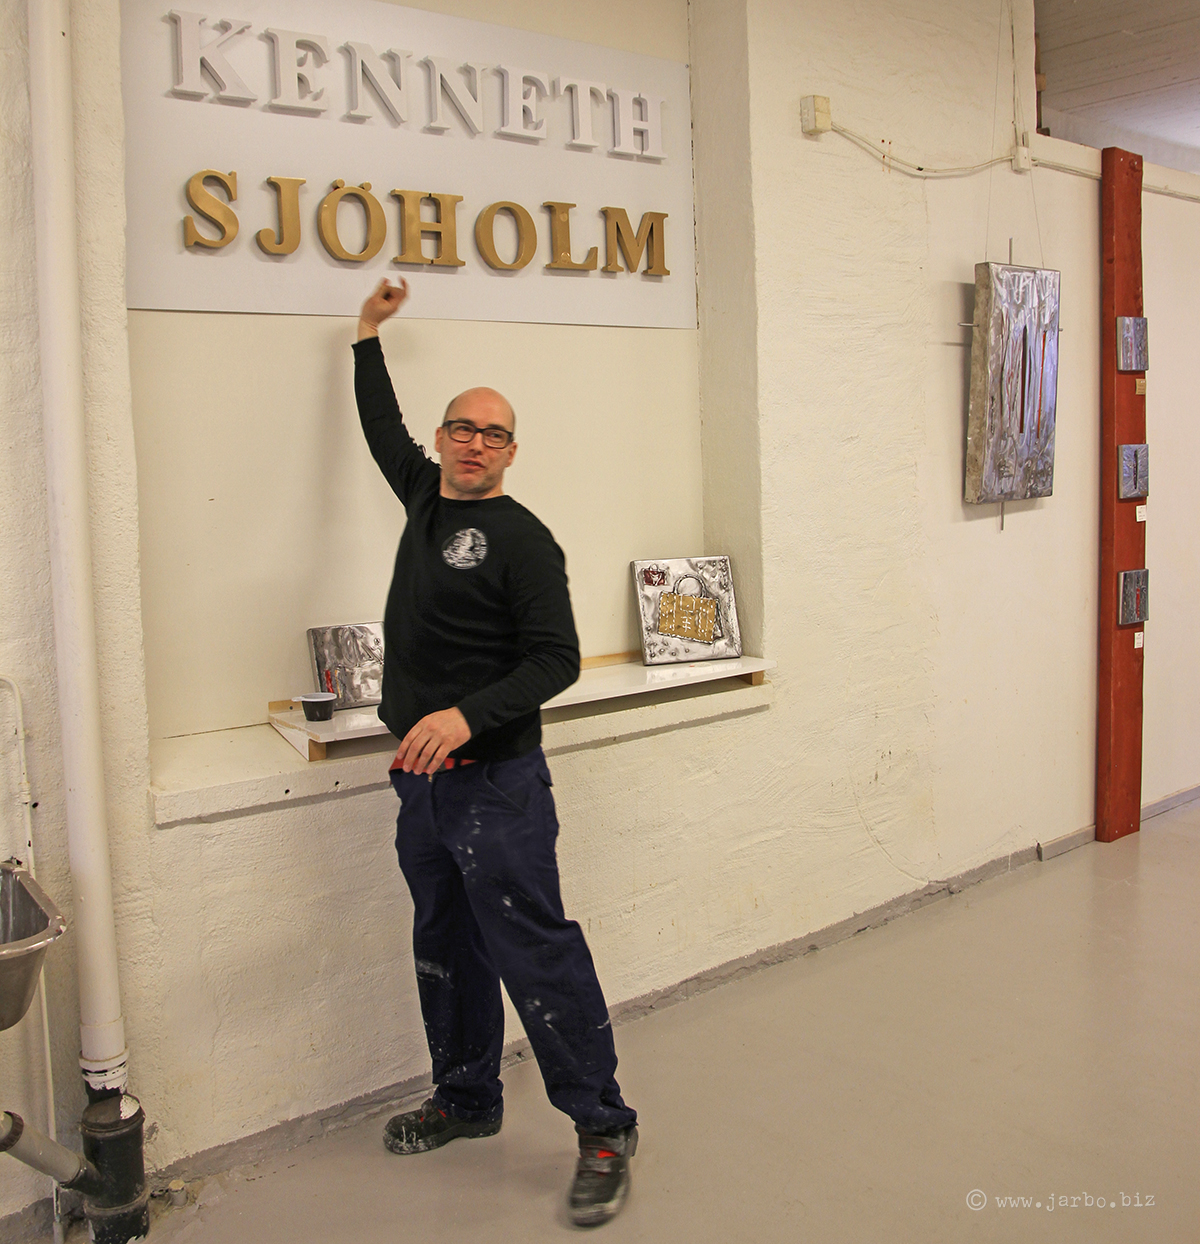 Kenneth Sjöholm